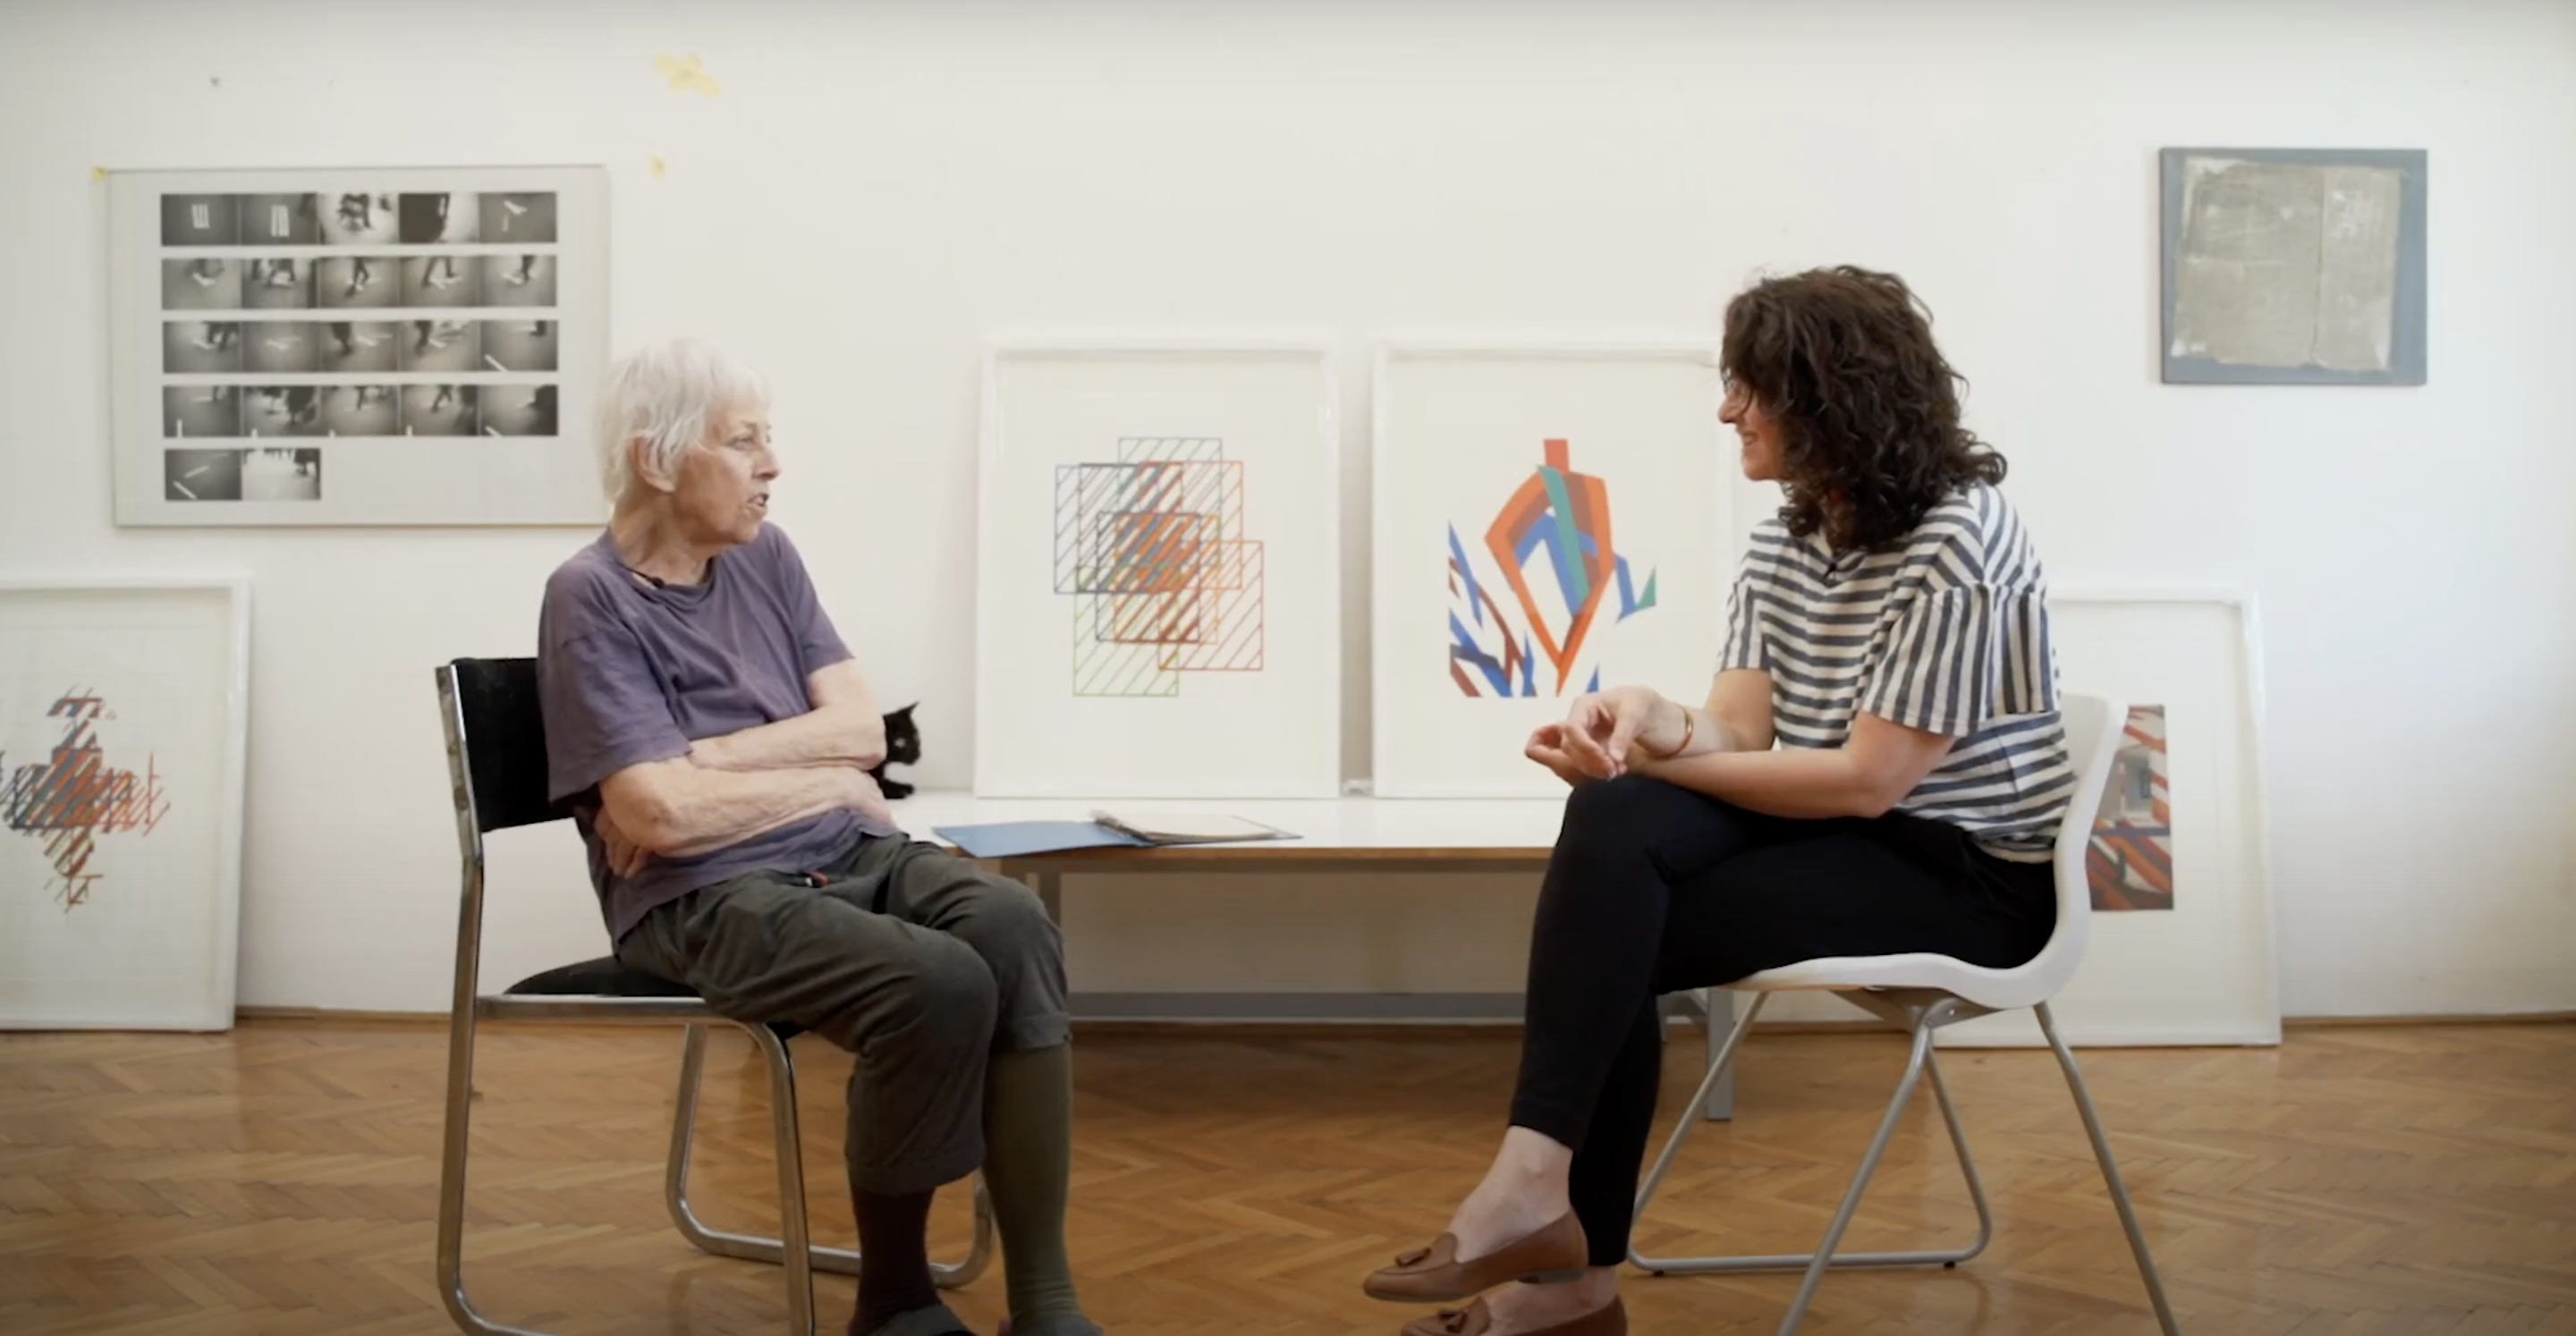 Space Painting - Dóra Maurer in conversation with Nóra Winkler